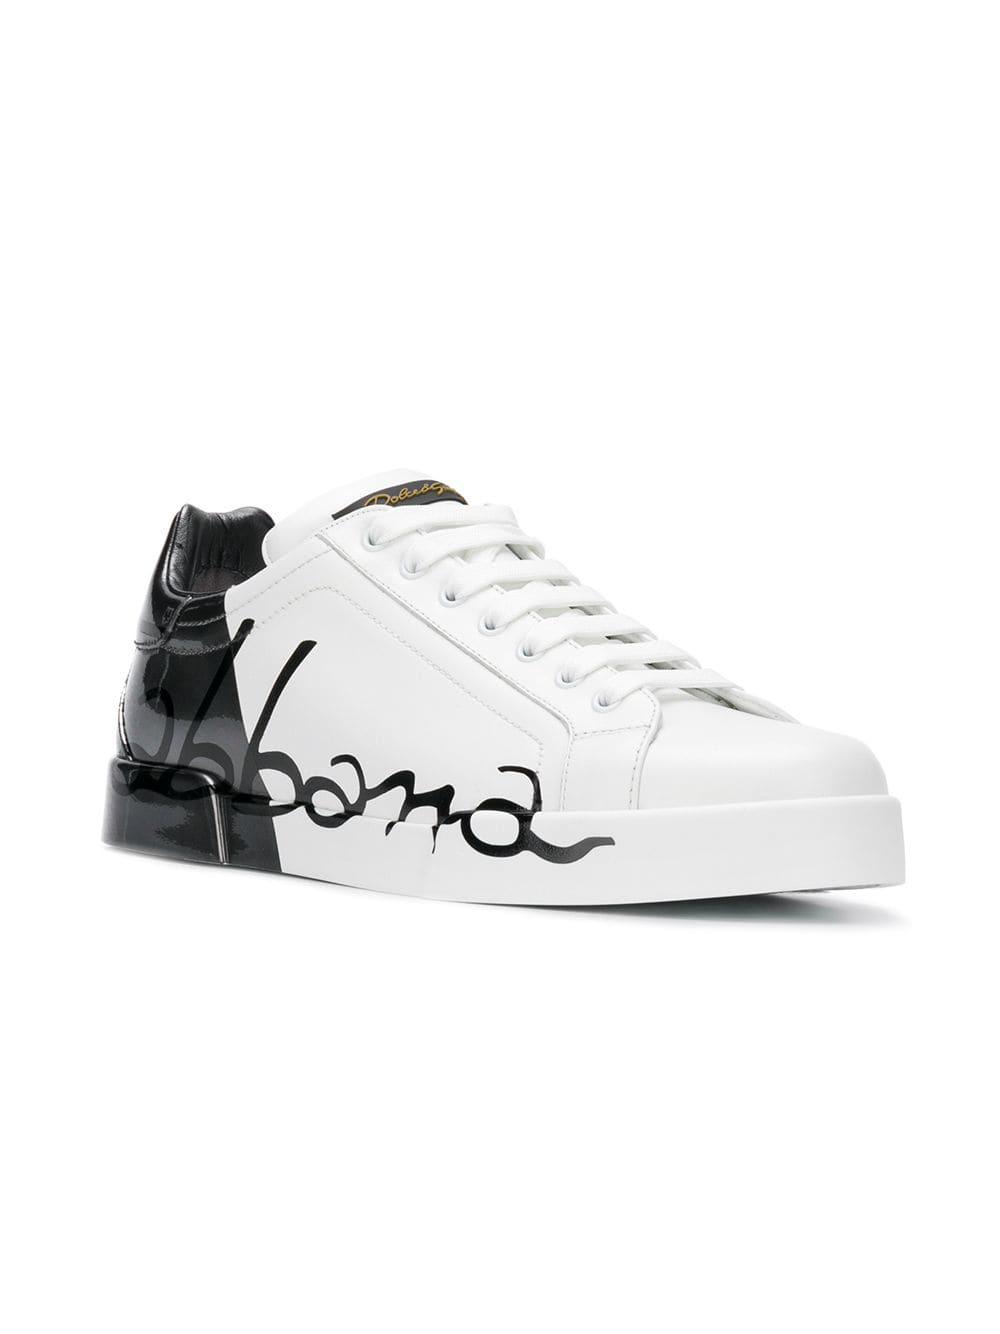 Dolce & Gabbana Portofino Sneakers In Leather And Patent in White 